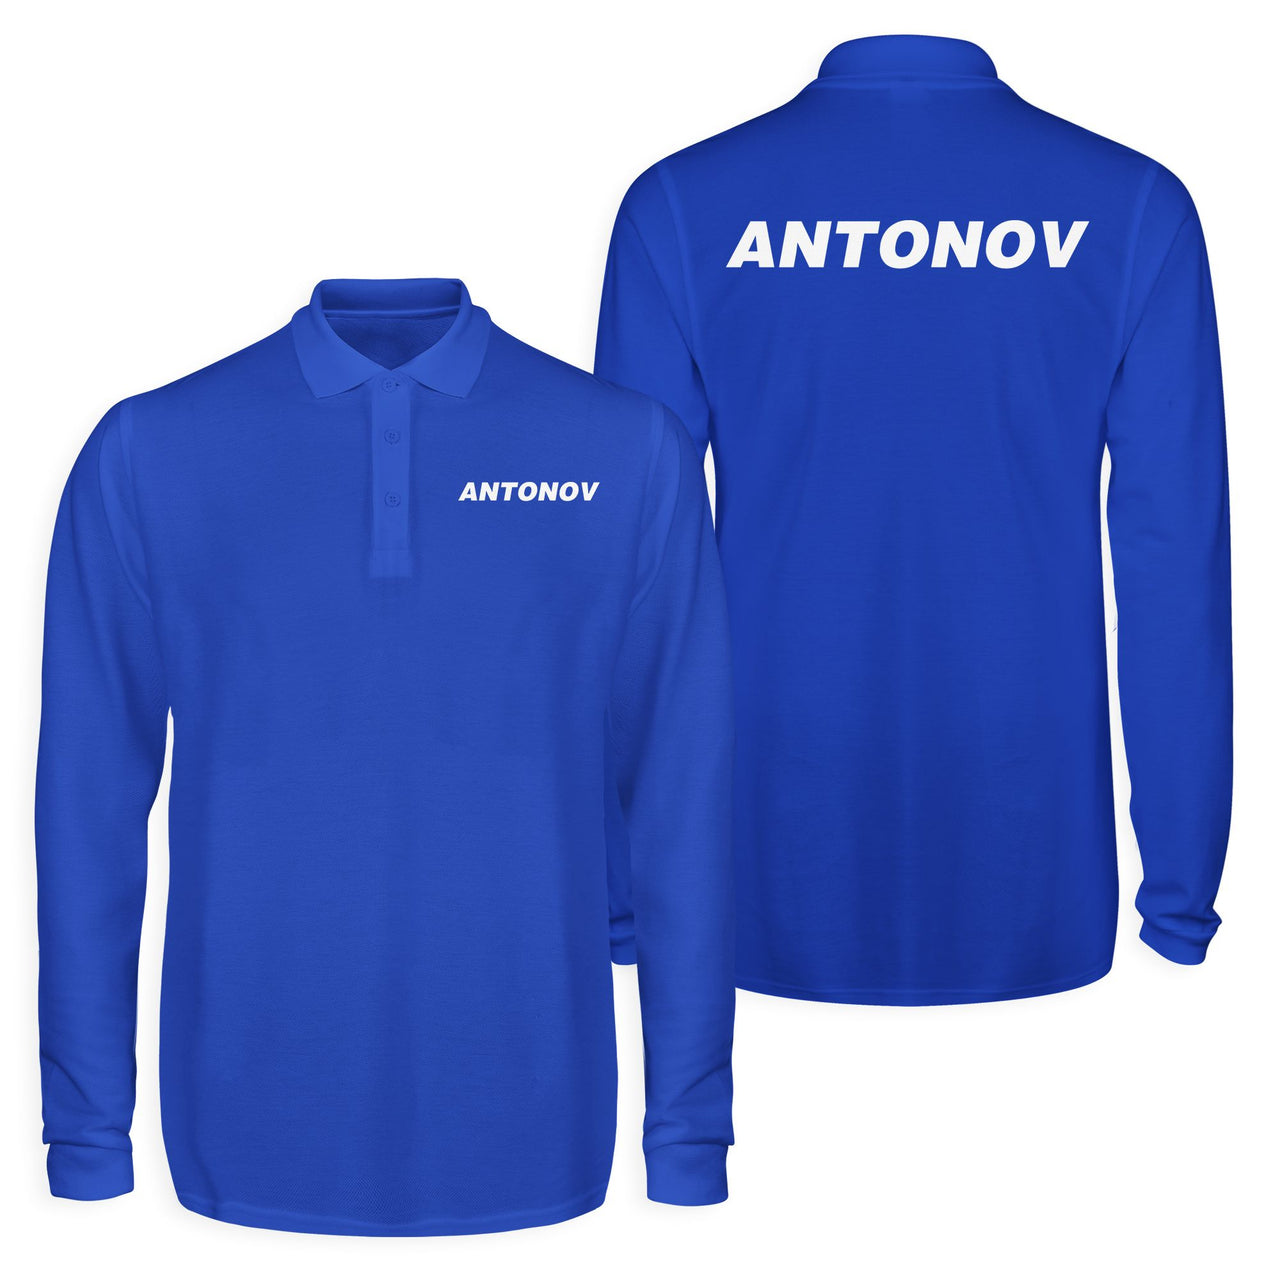 Antonov & Text Designed Long Sleeve Polo T-Shirts (Double-Side)